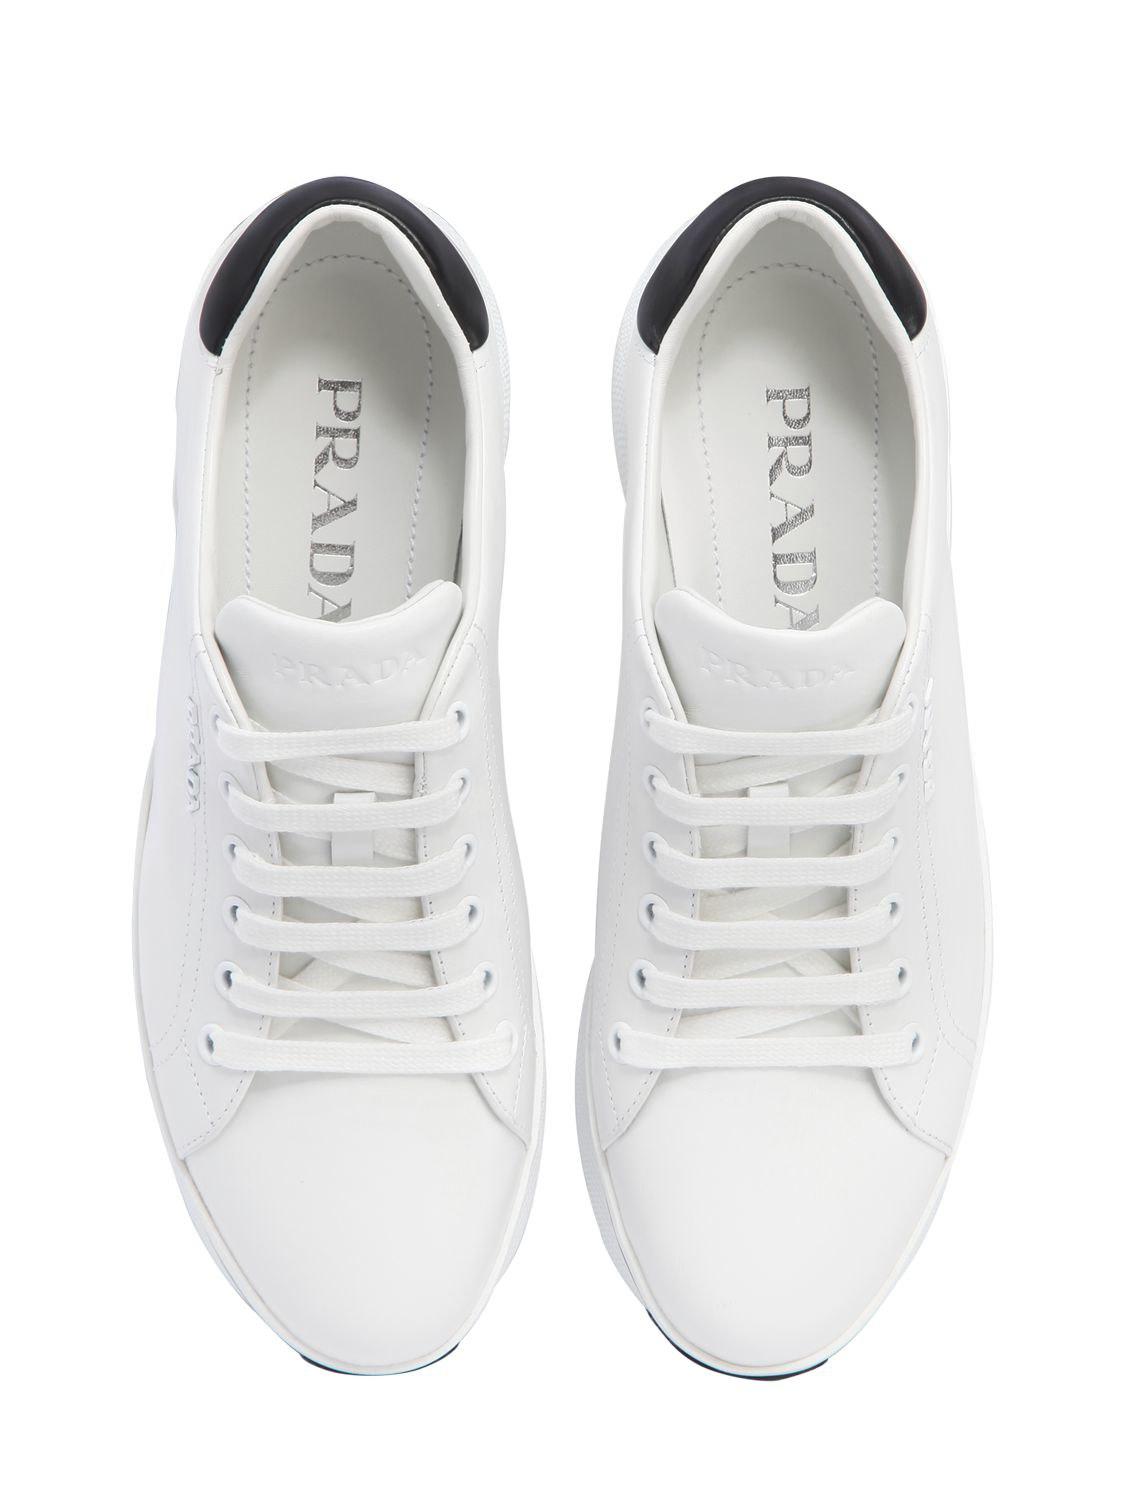 Prada 55mm Leather Platform Sneakers in White | Lyst